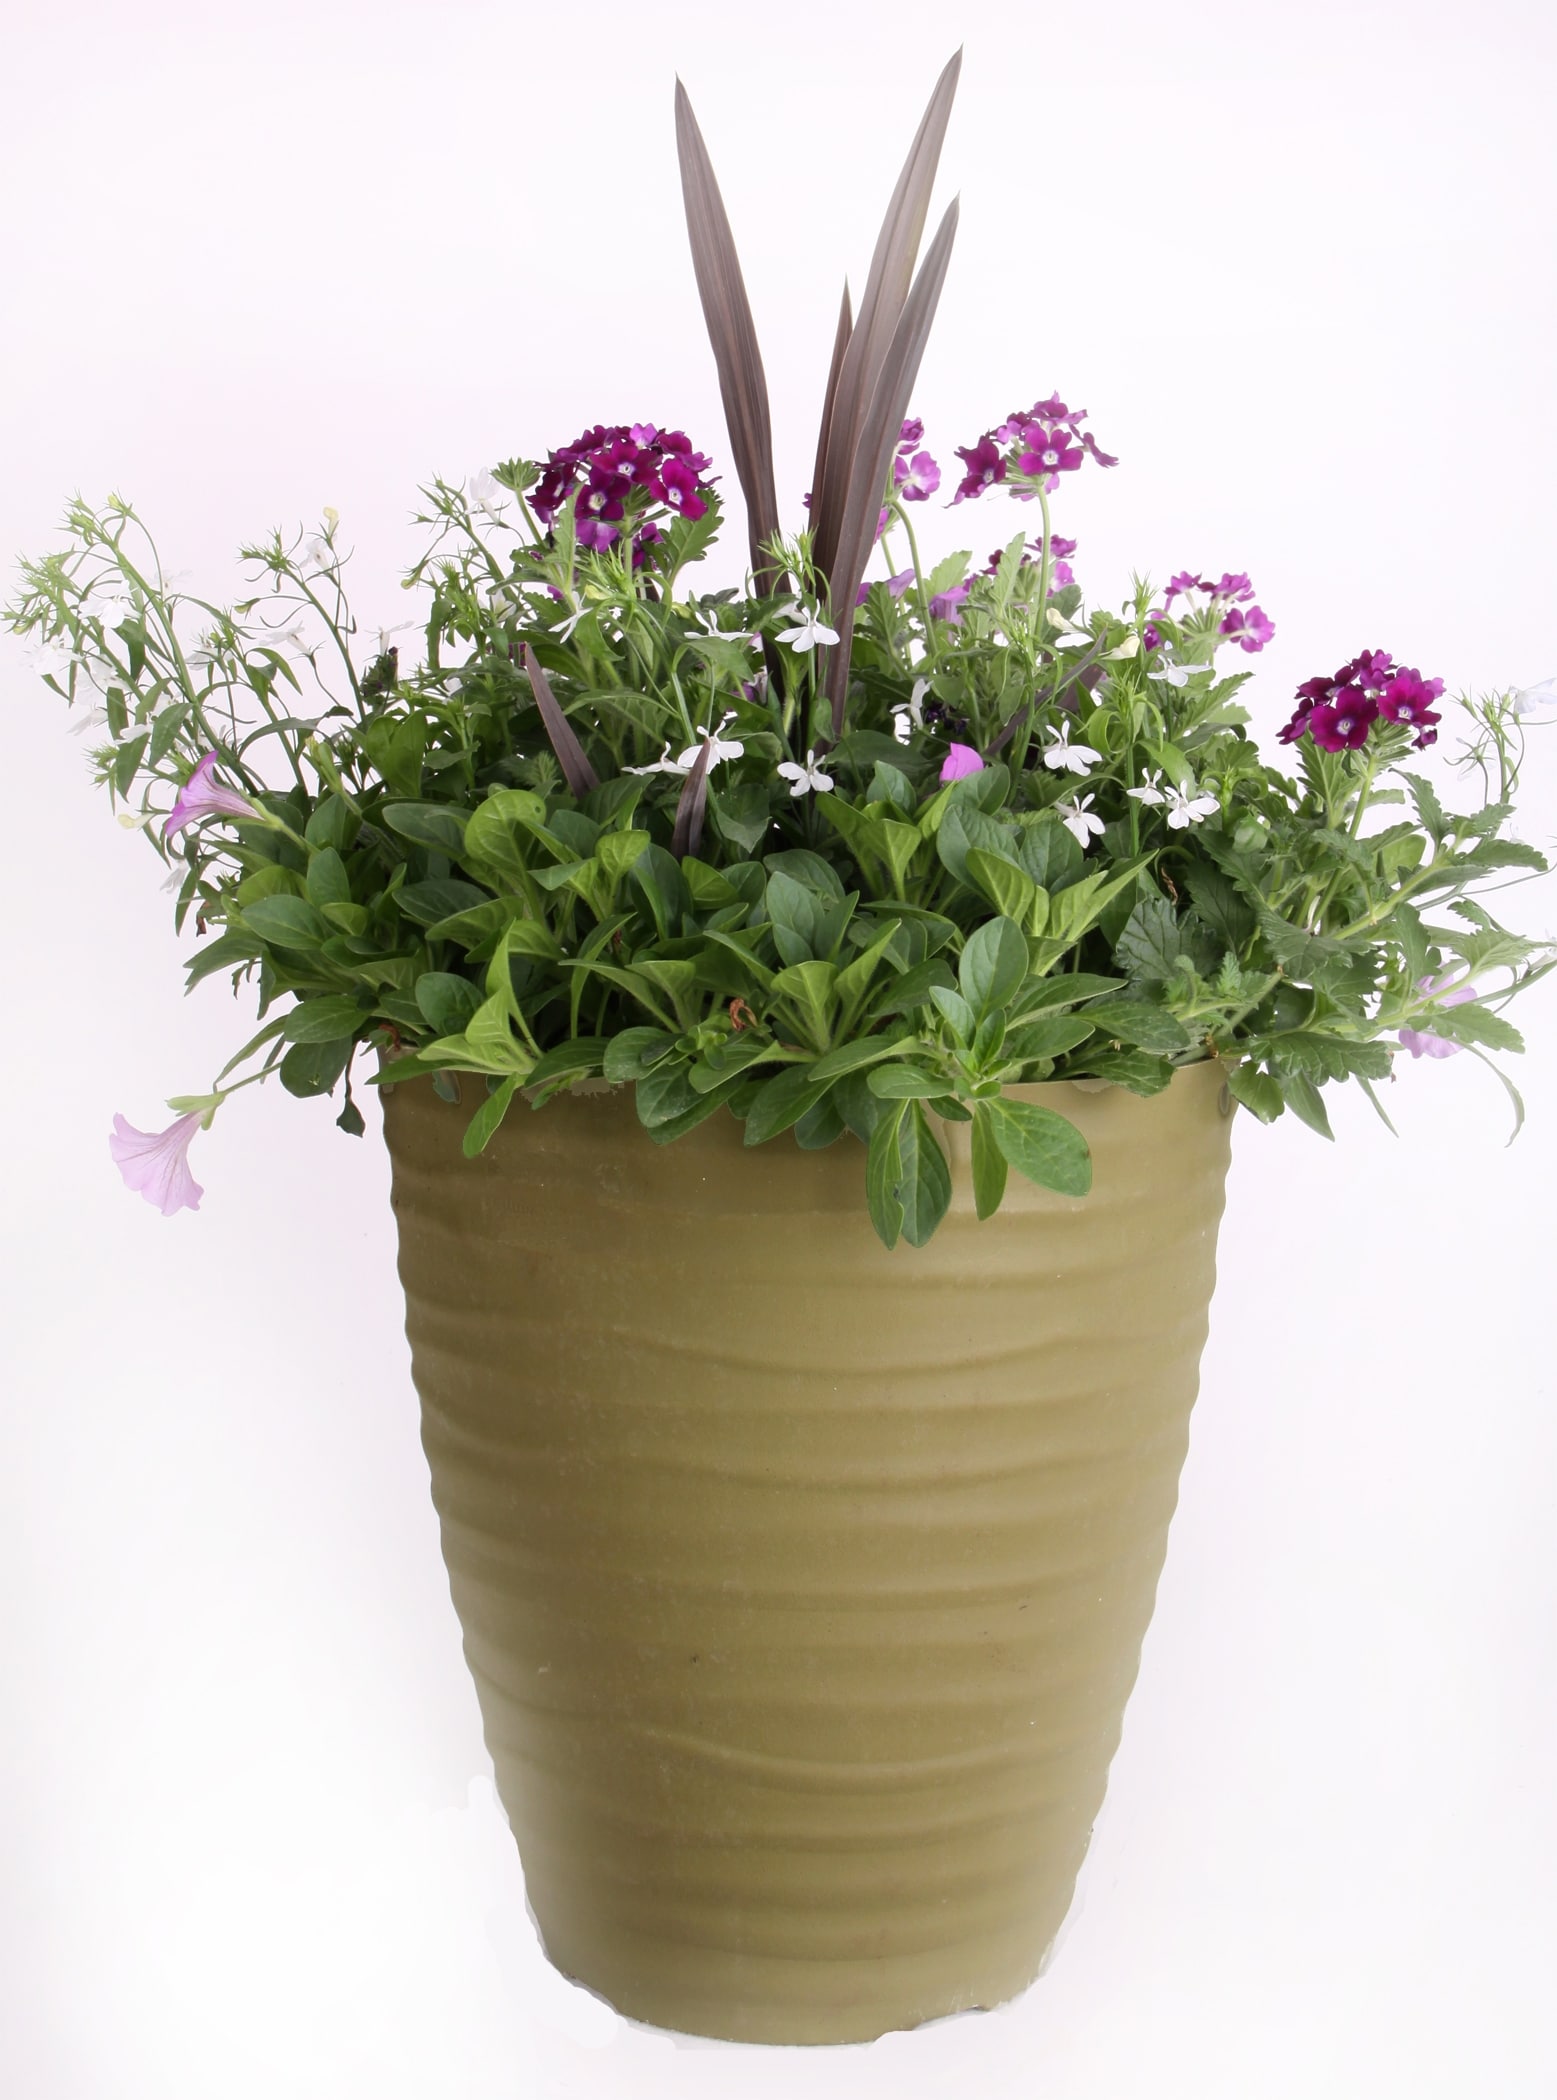  Olly & Rose Extra Large Plant Pot - Black Garden Planter - XL  Flower Pot - 18 inch Diameter : Patio, Lawn & Garden